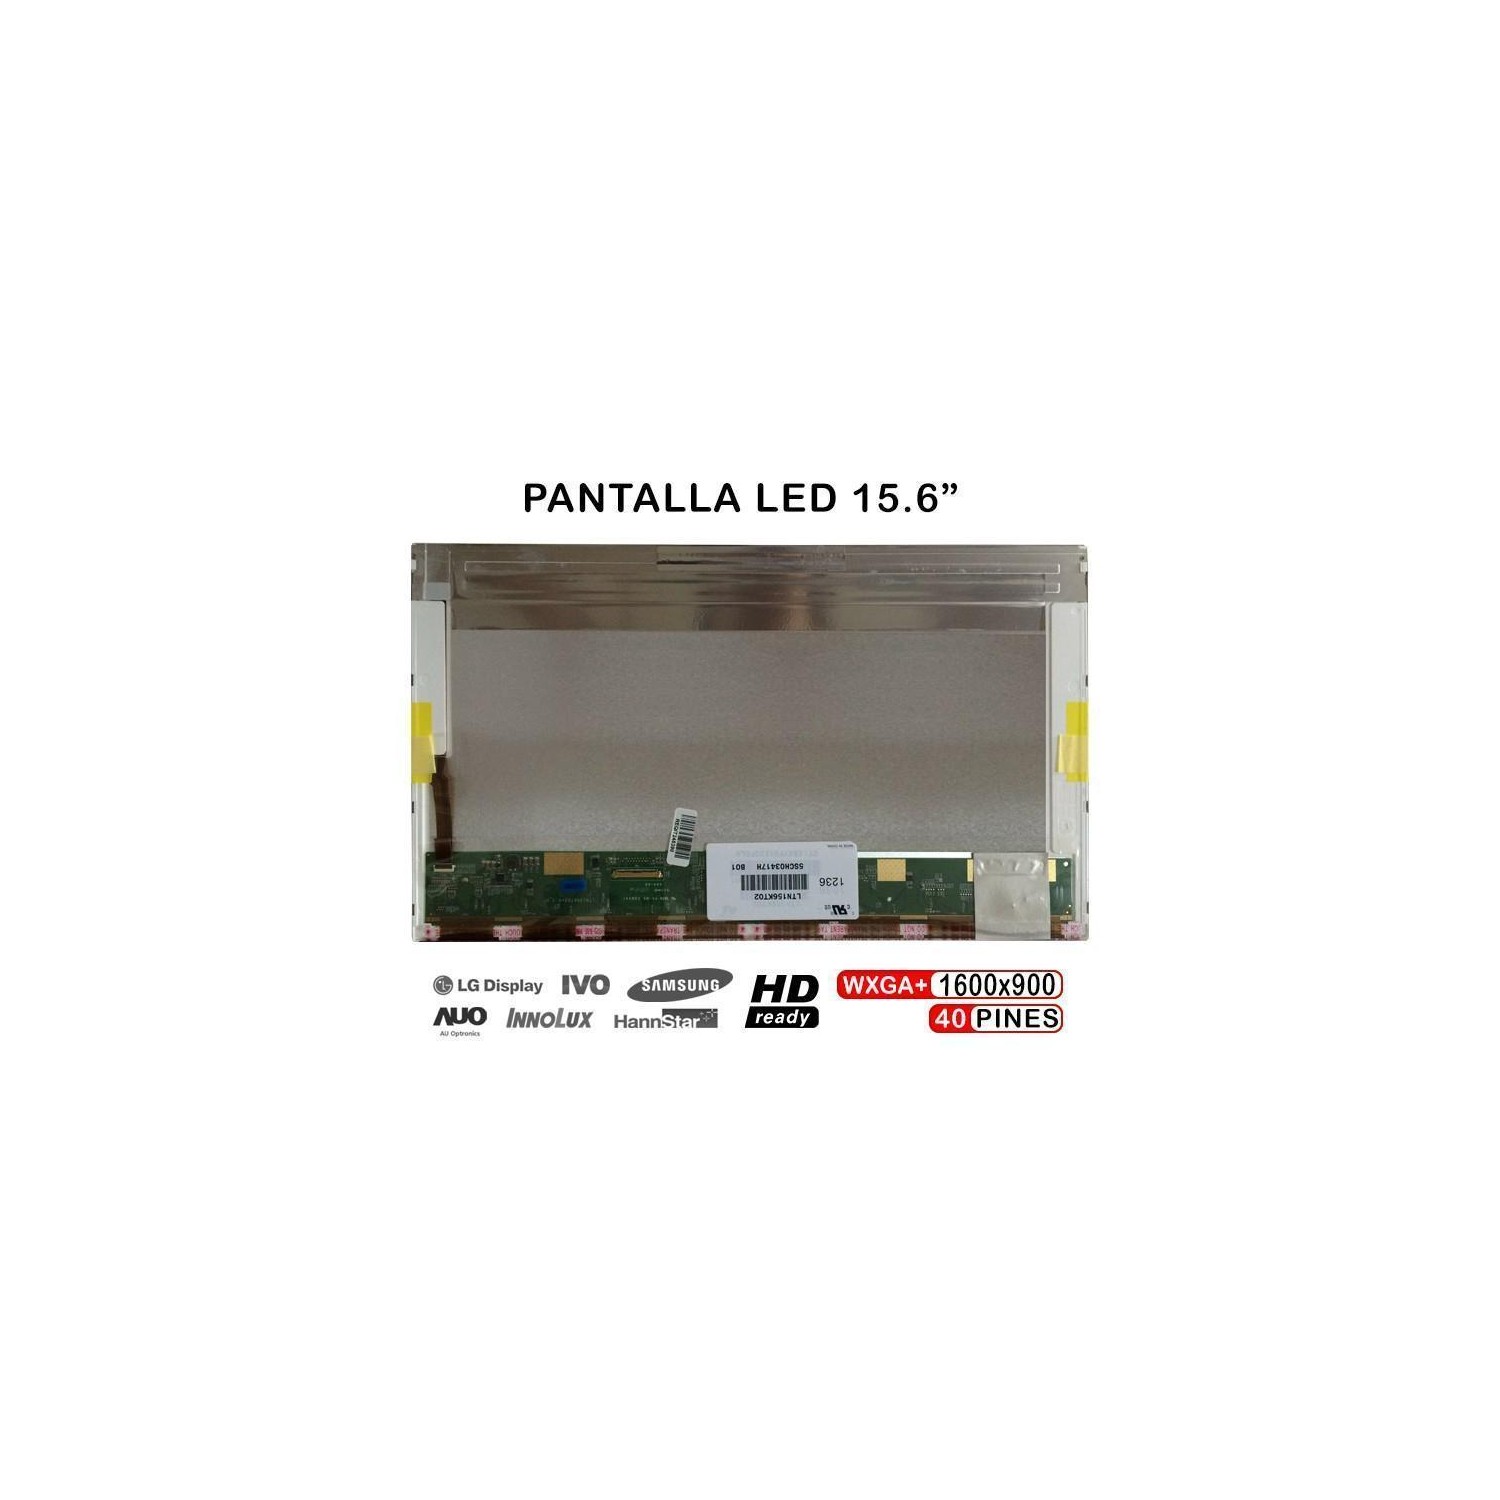 PANTALLA LED DE 15.6" PARA PORTÁTIL LTN156KT02 LP156WD1 TLD1 TLM1 B156RW01